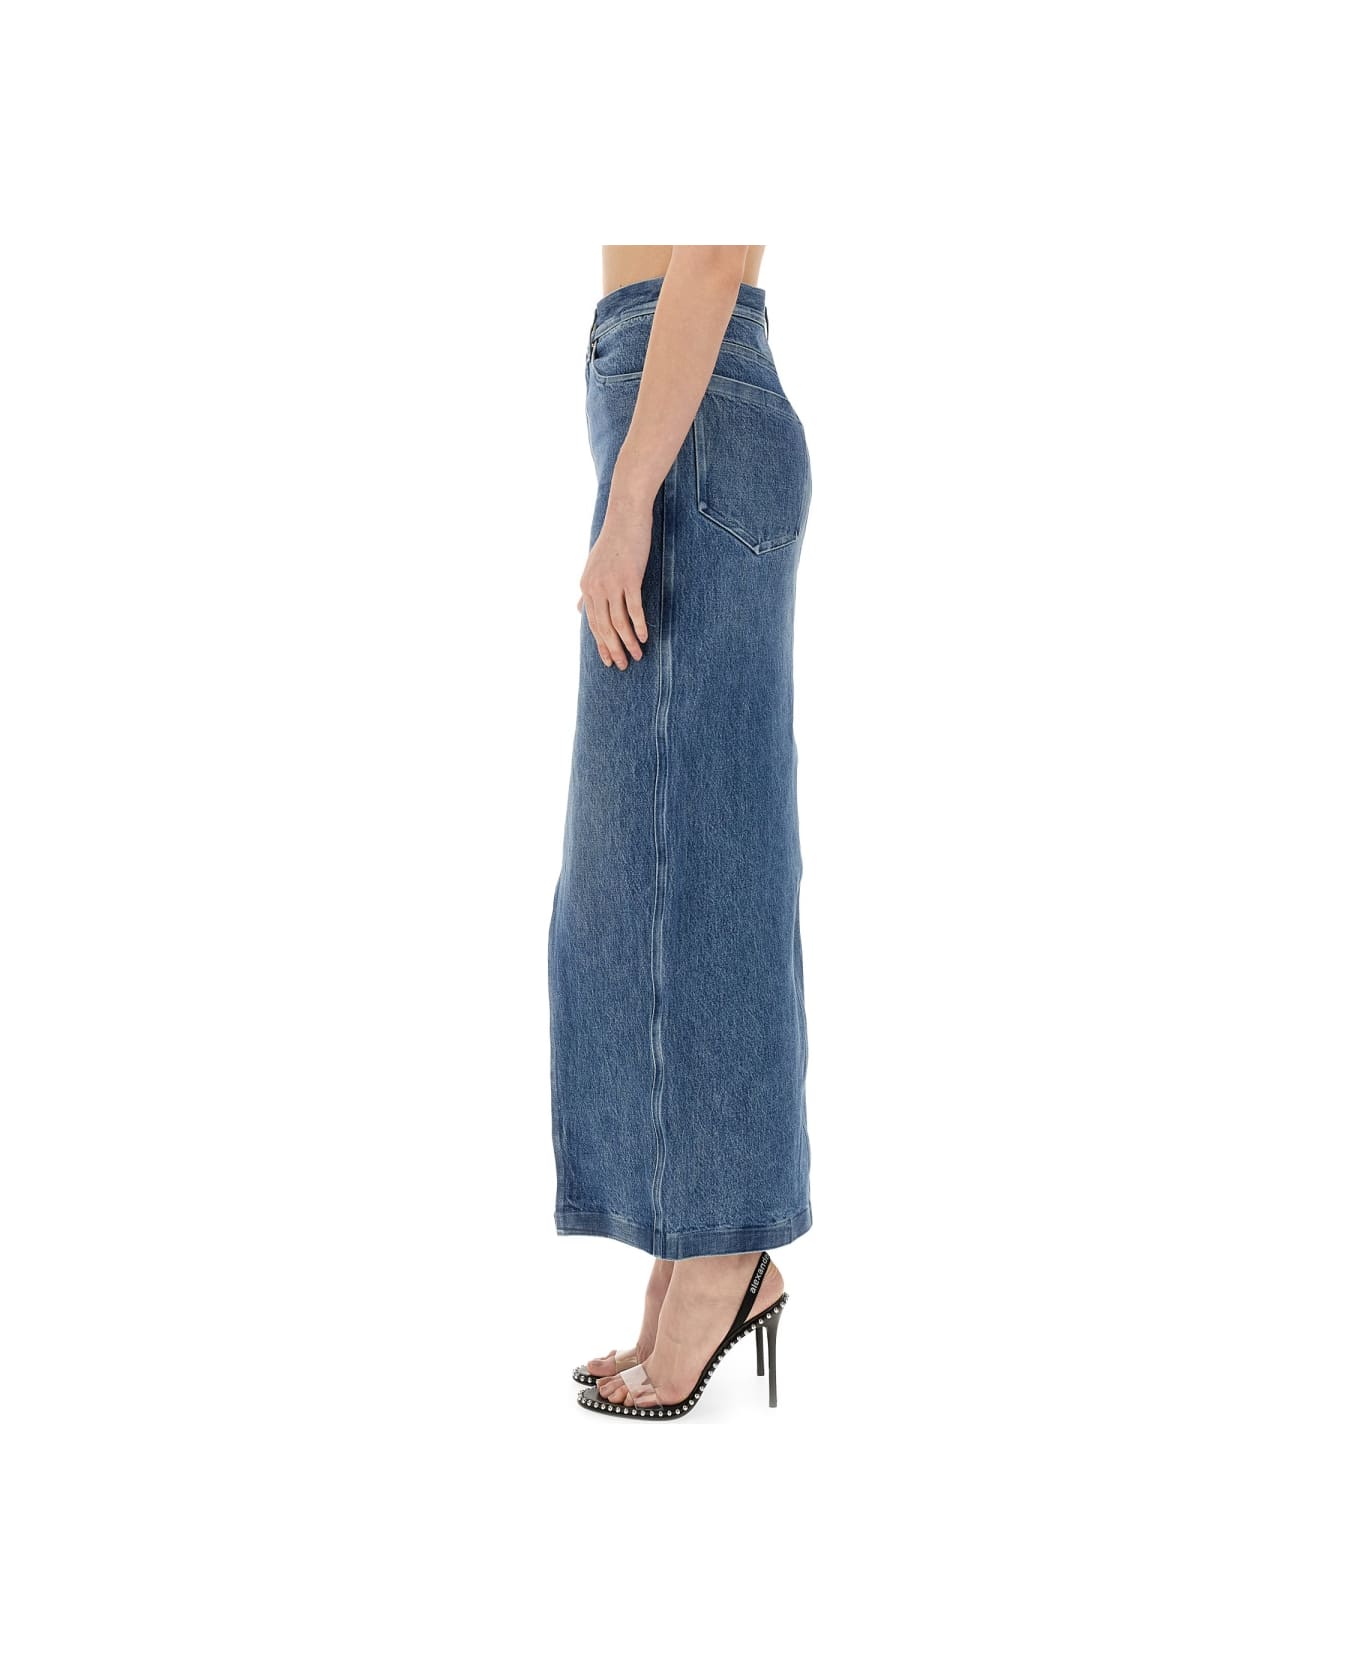 Alexander Wang Skirt With Slit - Vintage Medium Indigo